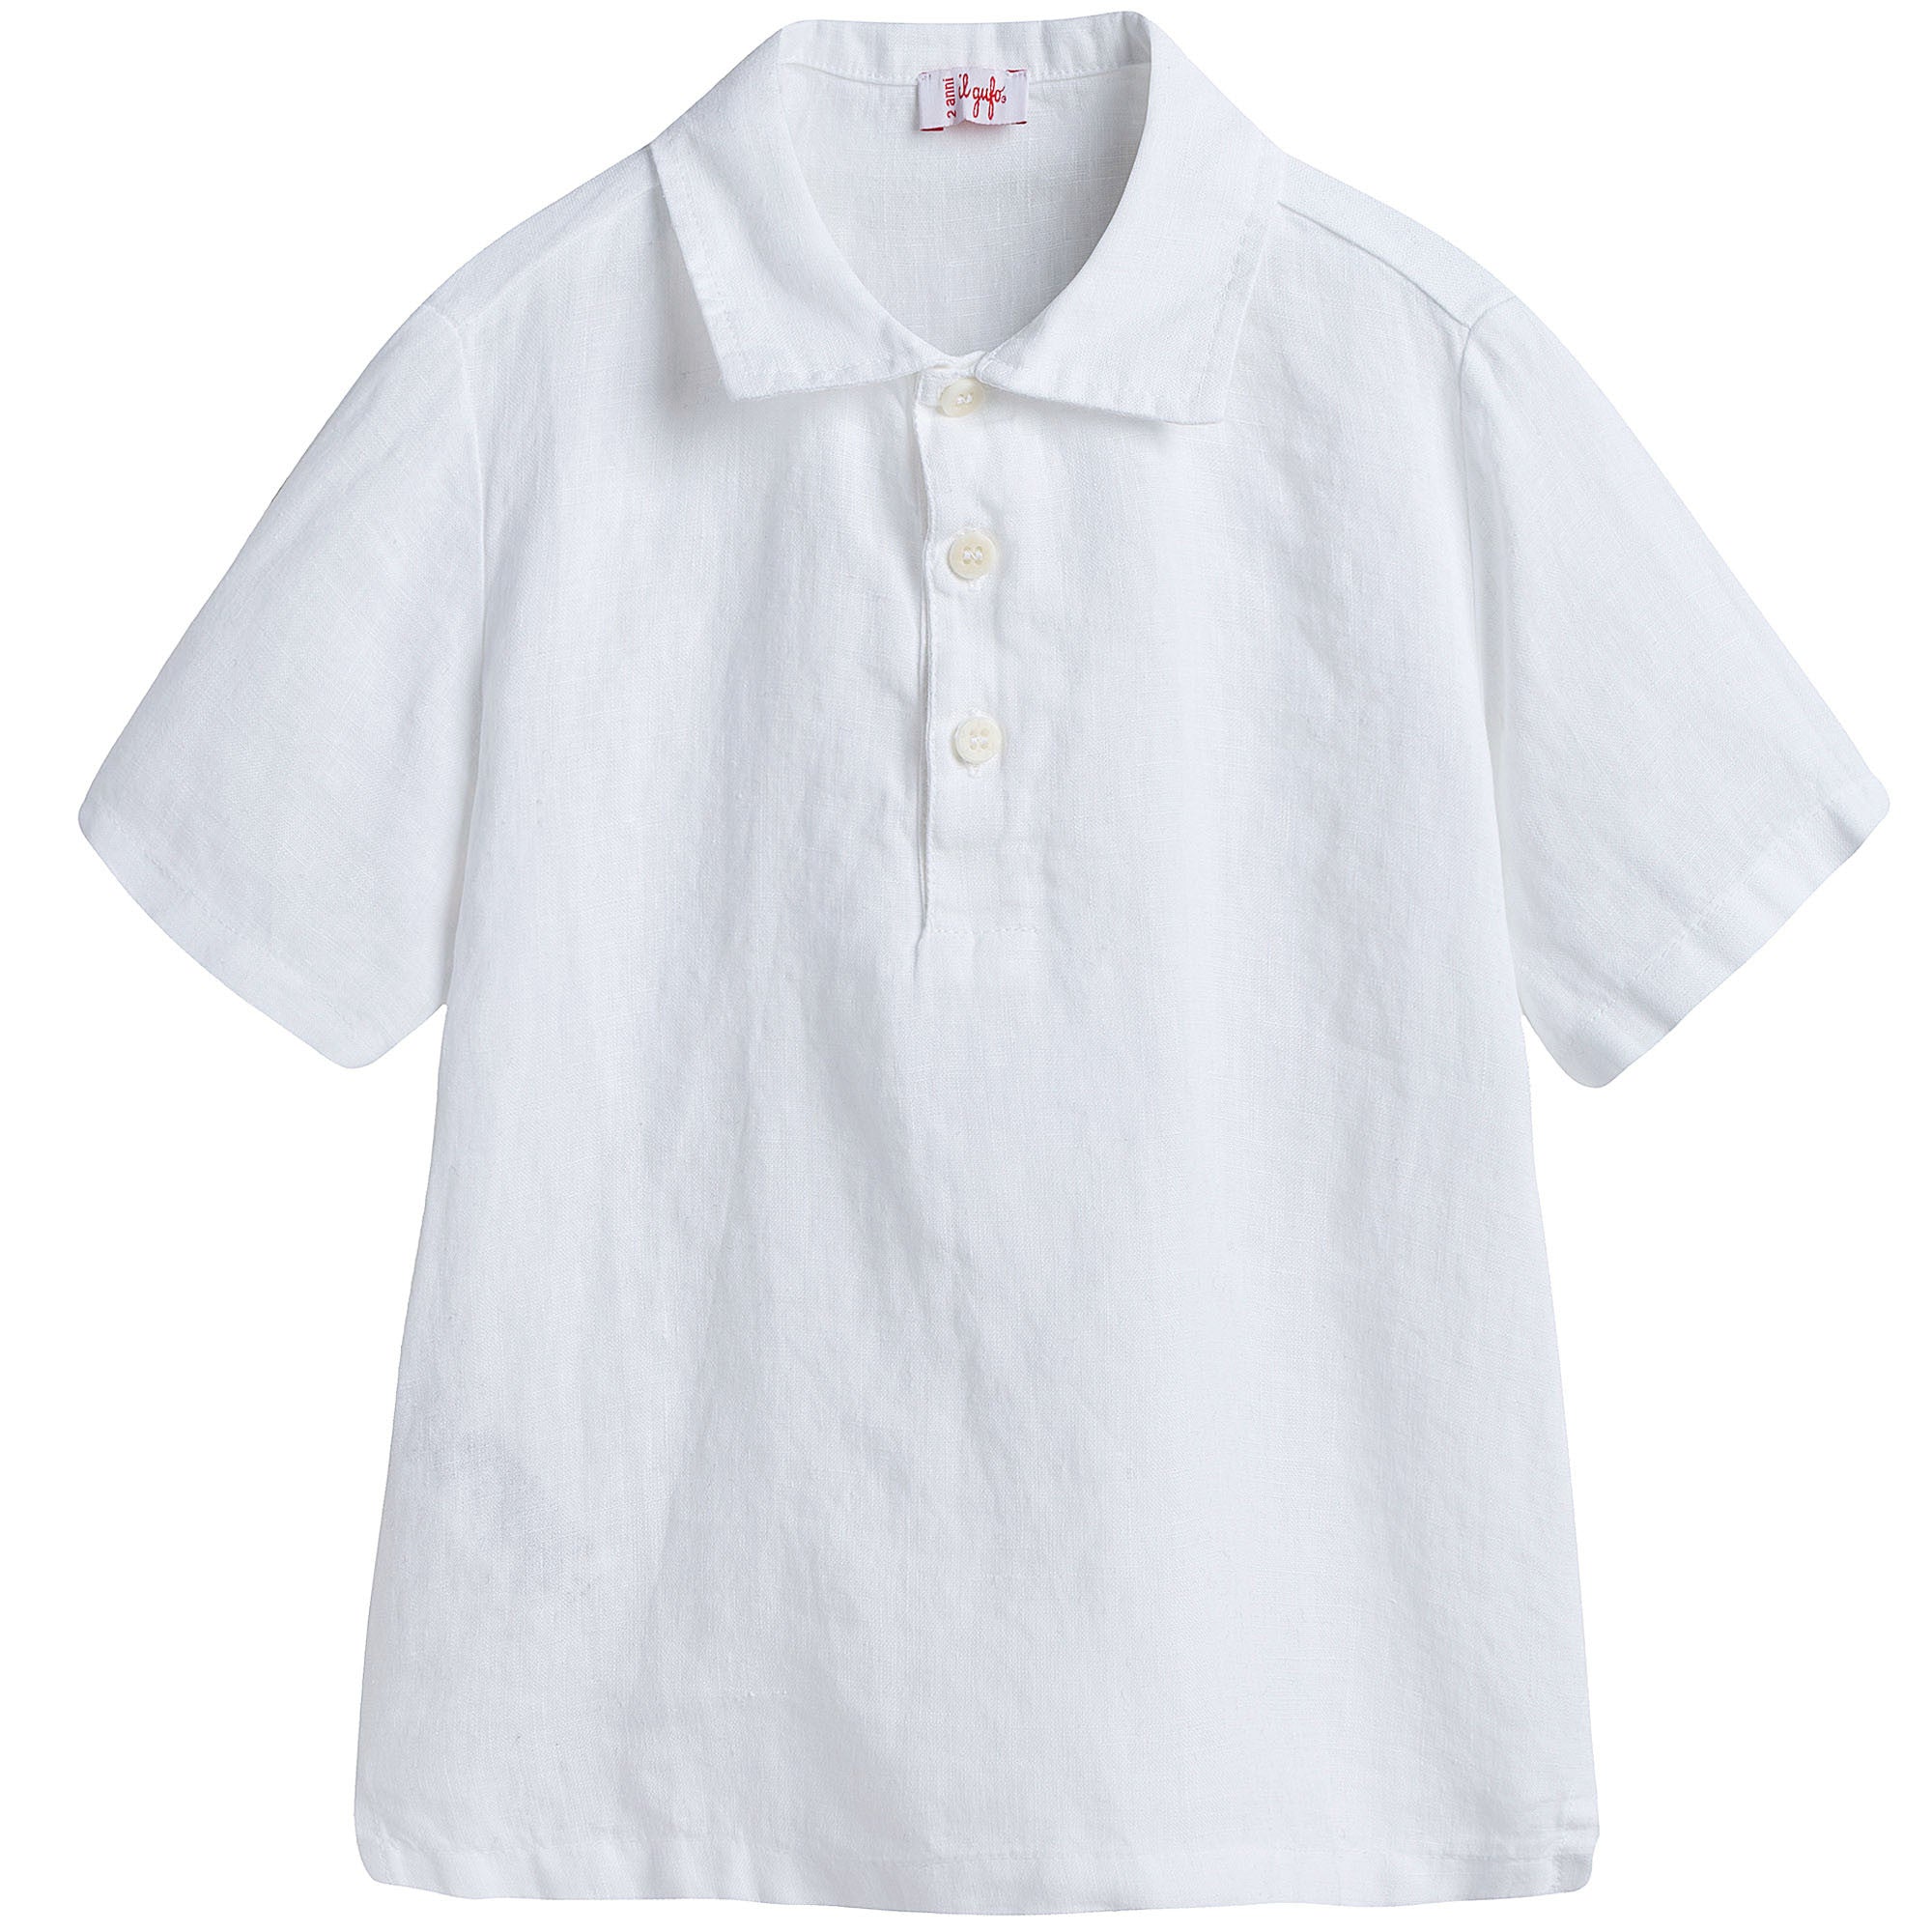 Boys White Polo Shirt - CÉMAROSE | Children's Fashion Store - 1